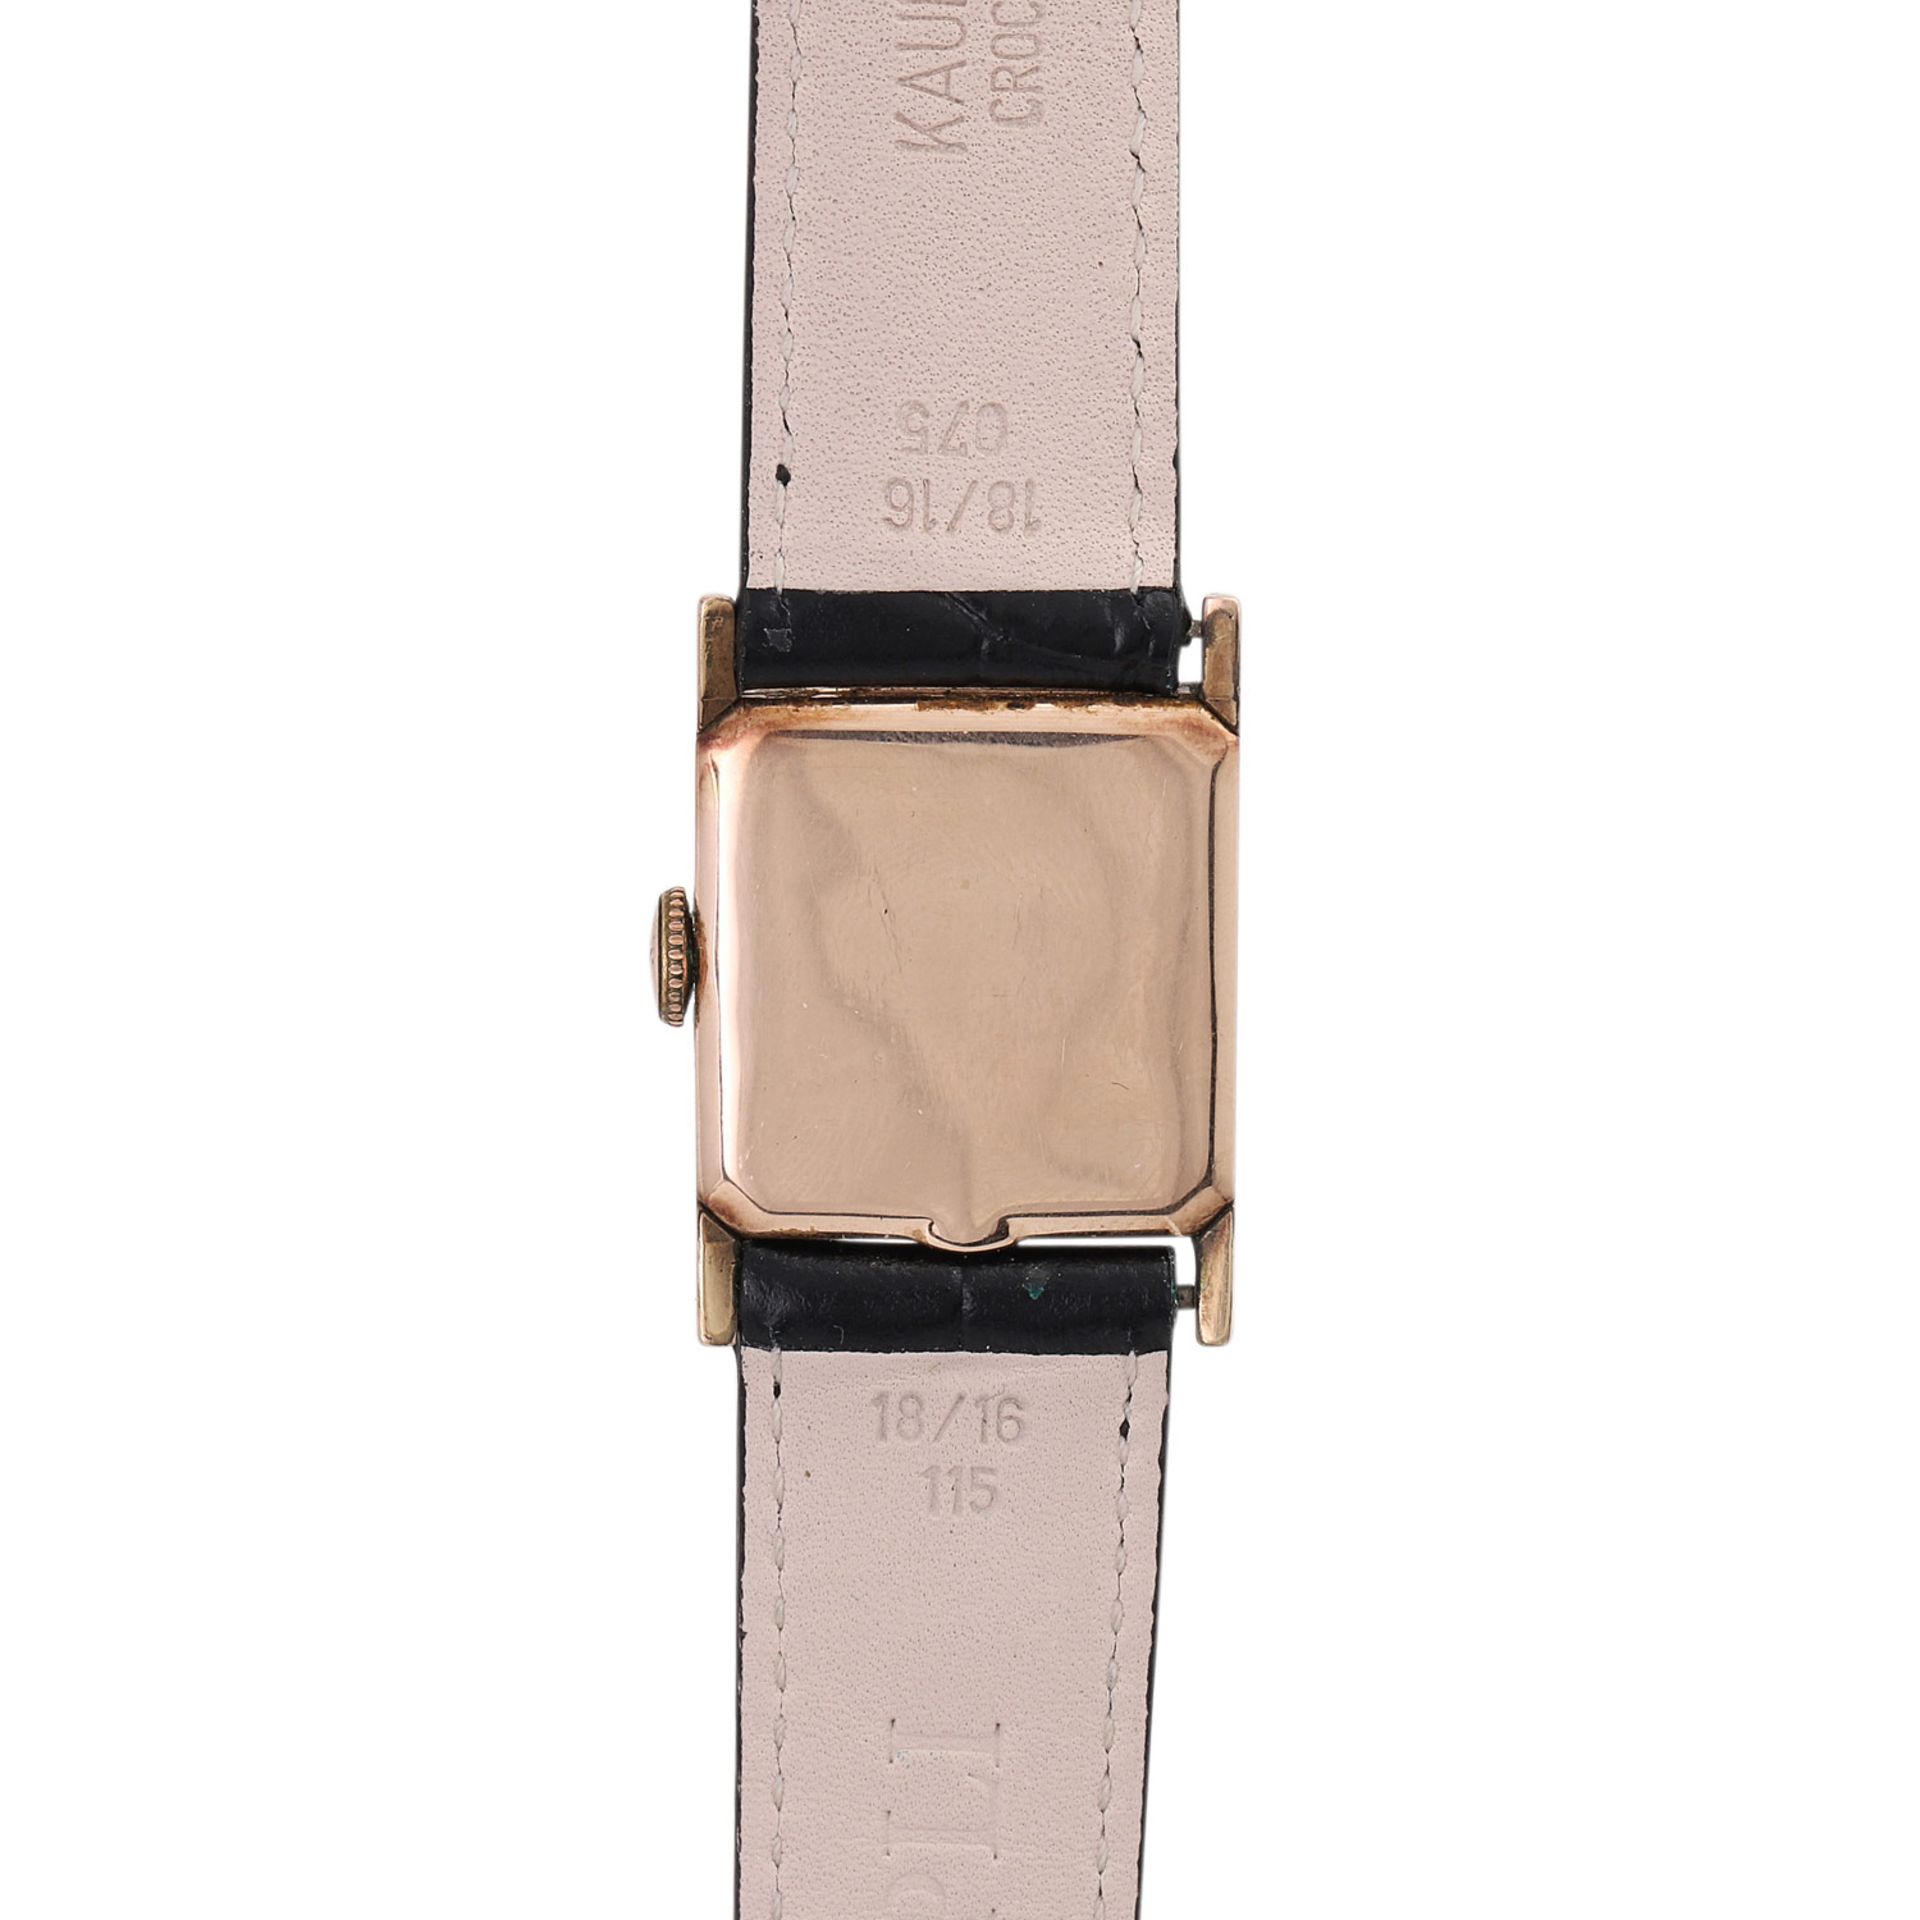 LE COULTRE Vintage Armbanduhr, ca. 1940/50er Jahre. Gold 14K.Handaufzugwerk, Cal. 428. Werk-Nr. - Bild 2 aus 4